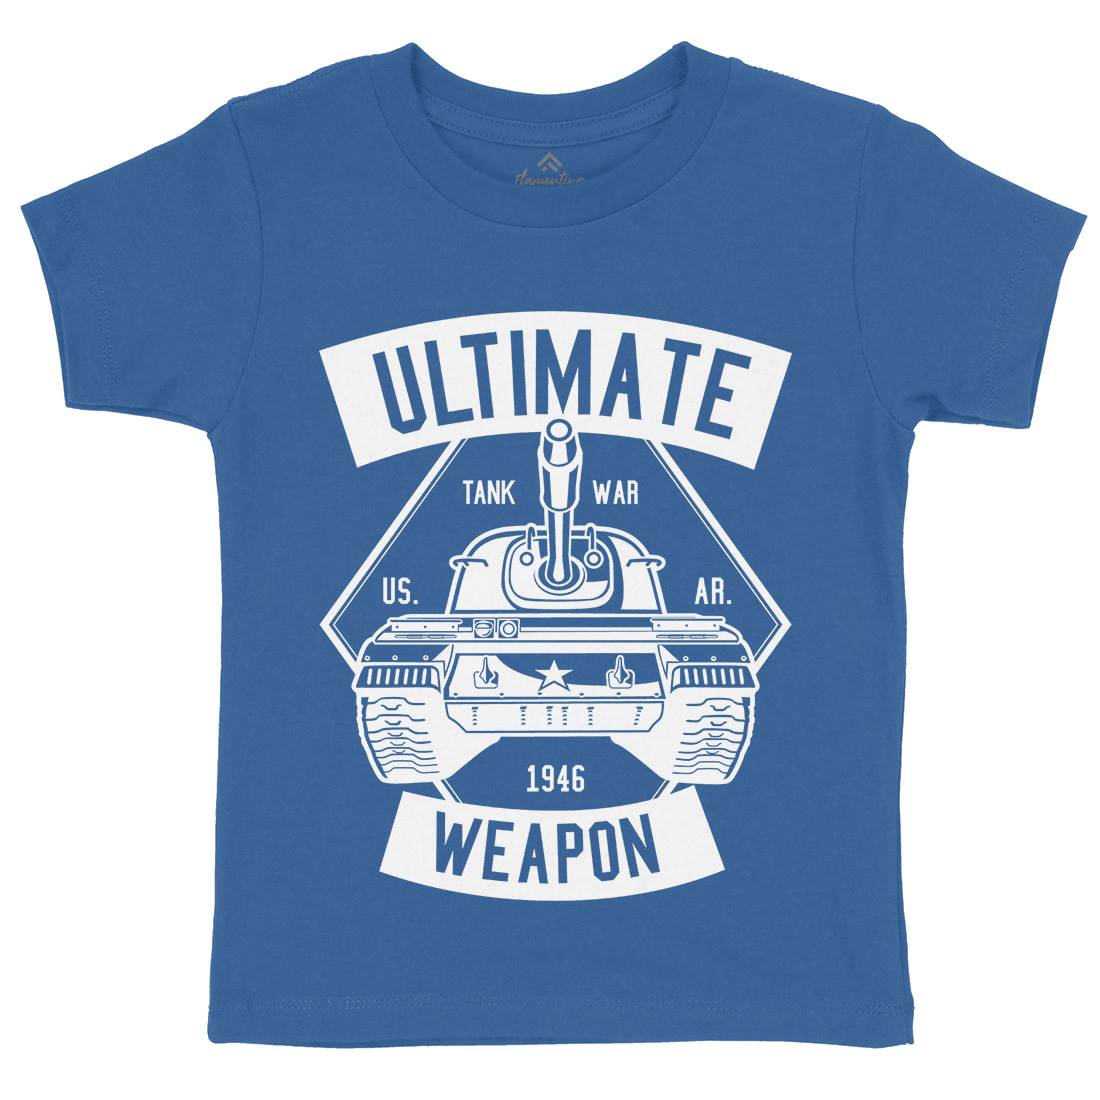 Tank War Ultimate Weapon Kids Organic Crew Neck T-Shirt Army B649